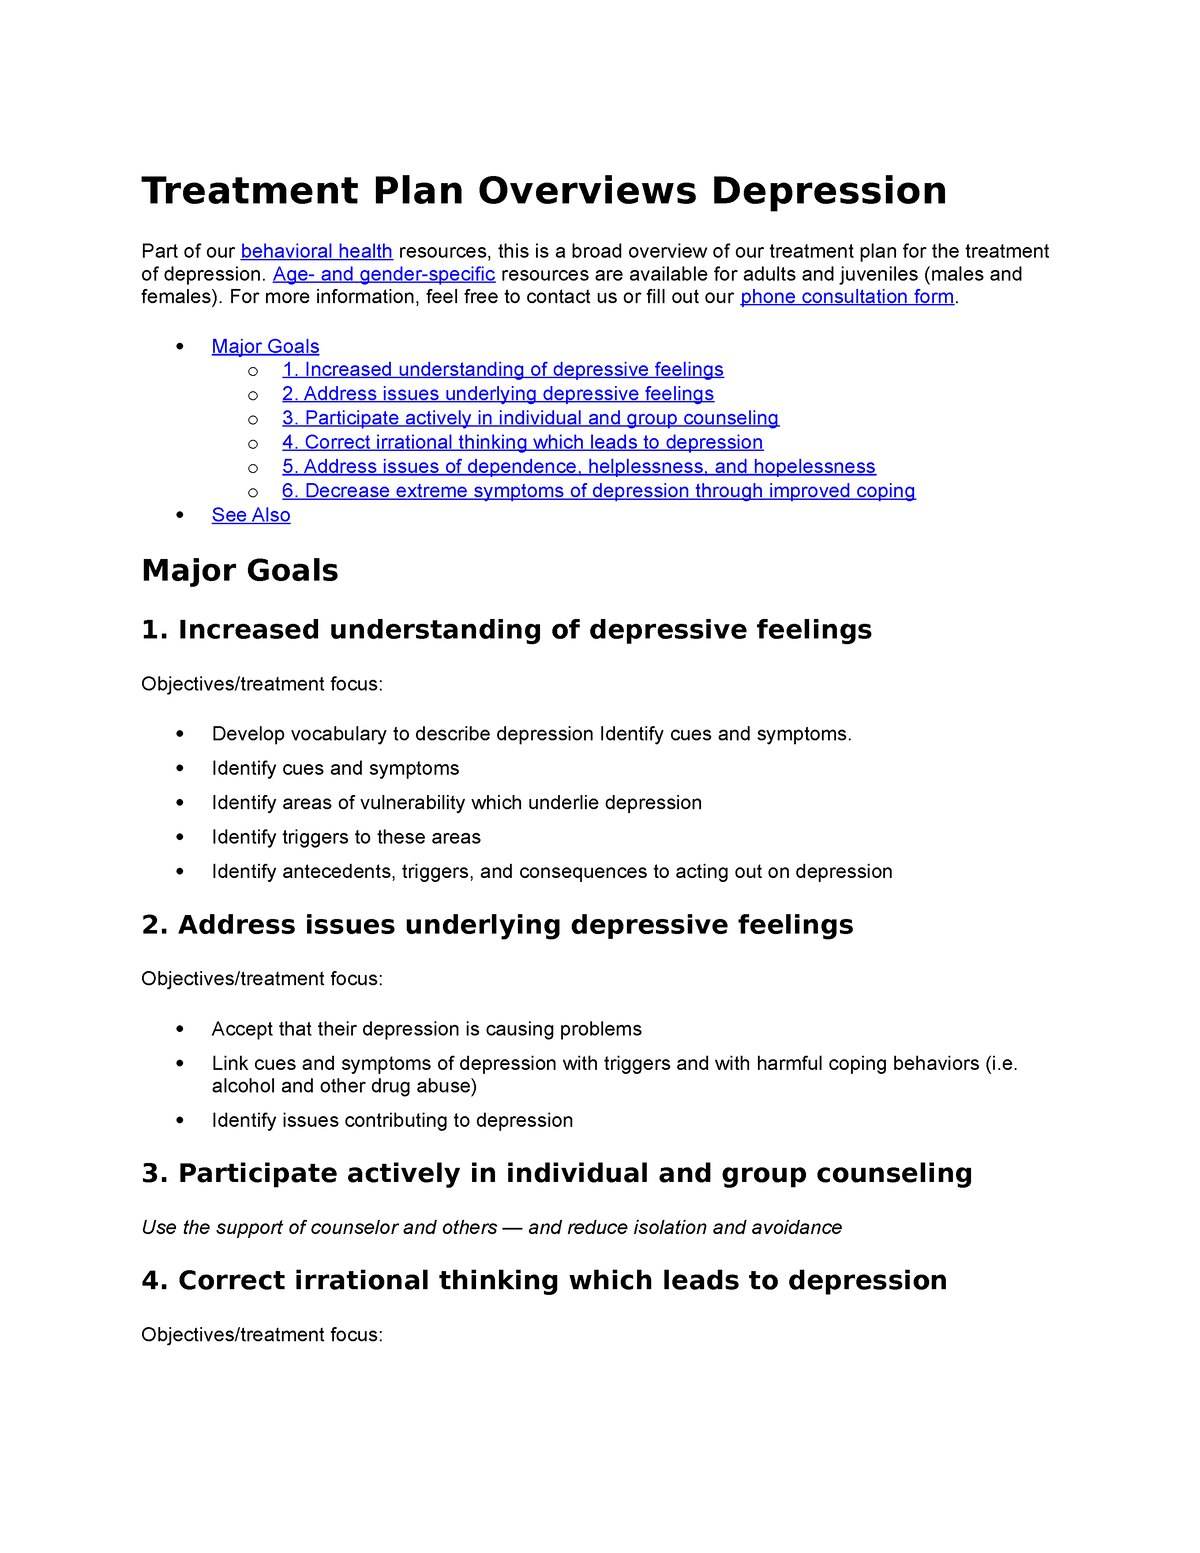 depression treatment essay